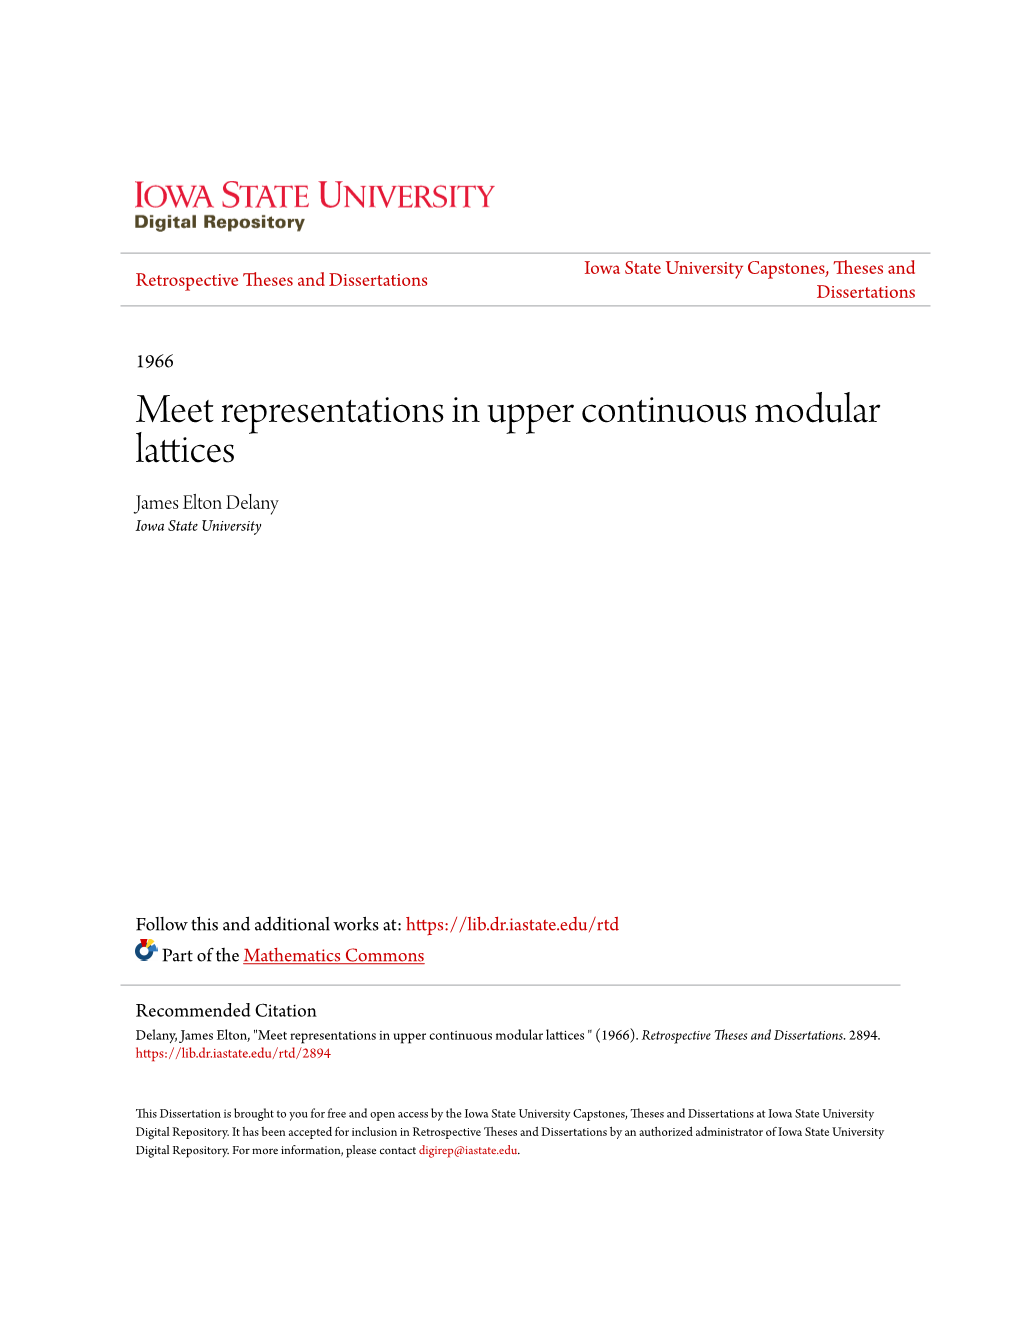 Meet Representations in Upper Continuous Modular Lattices James Elton Delany Iowa State University